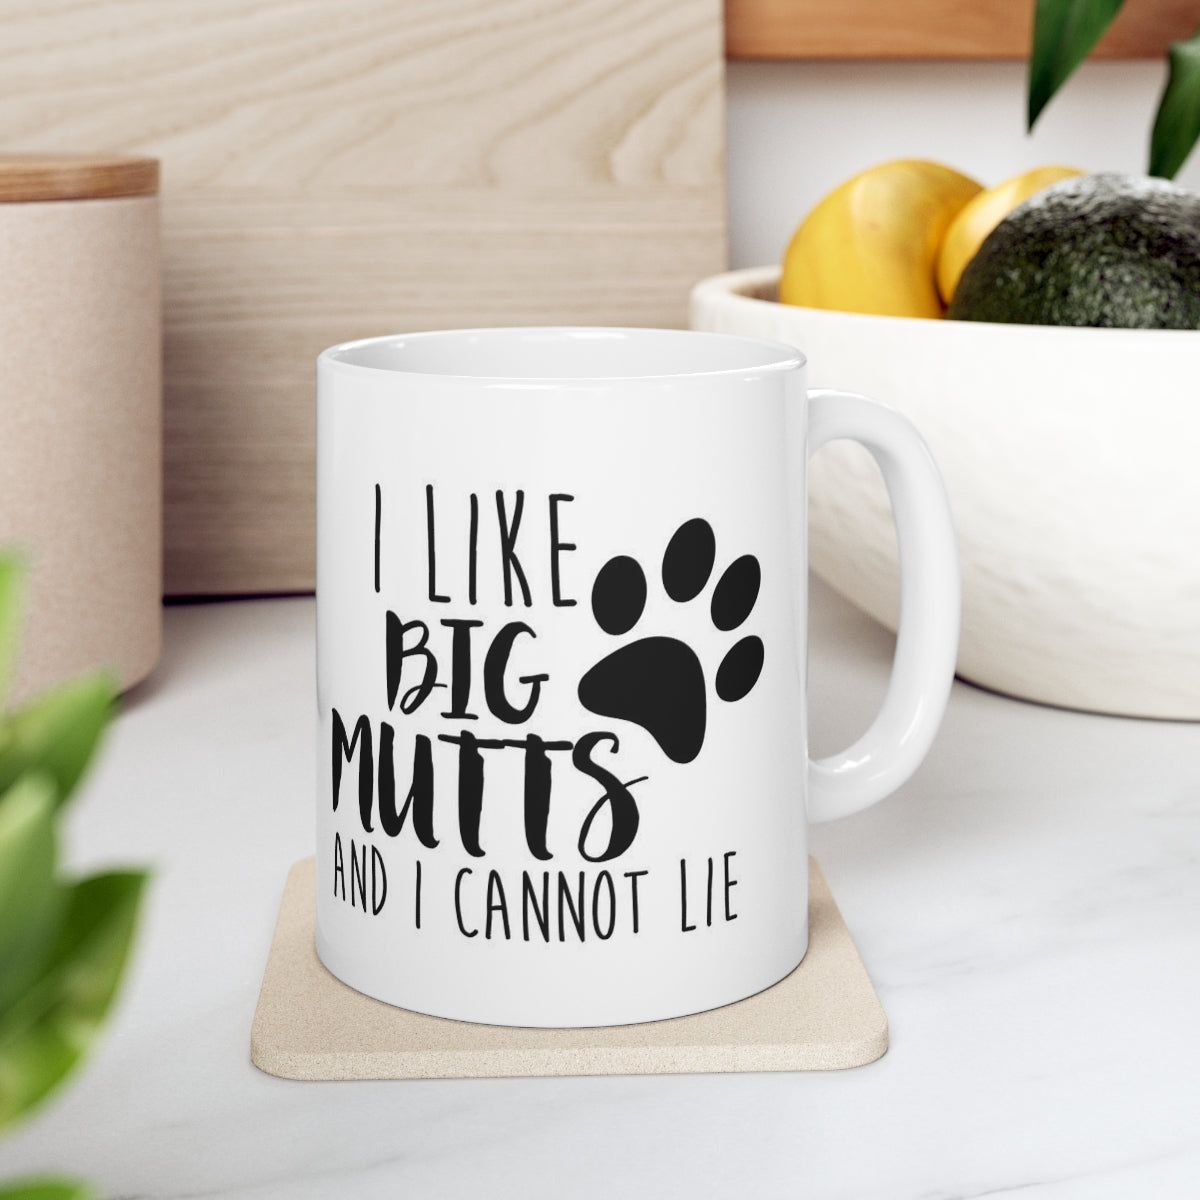 I like big mutts and I cannot lie Ceramic Mug 11oz